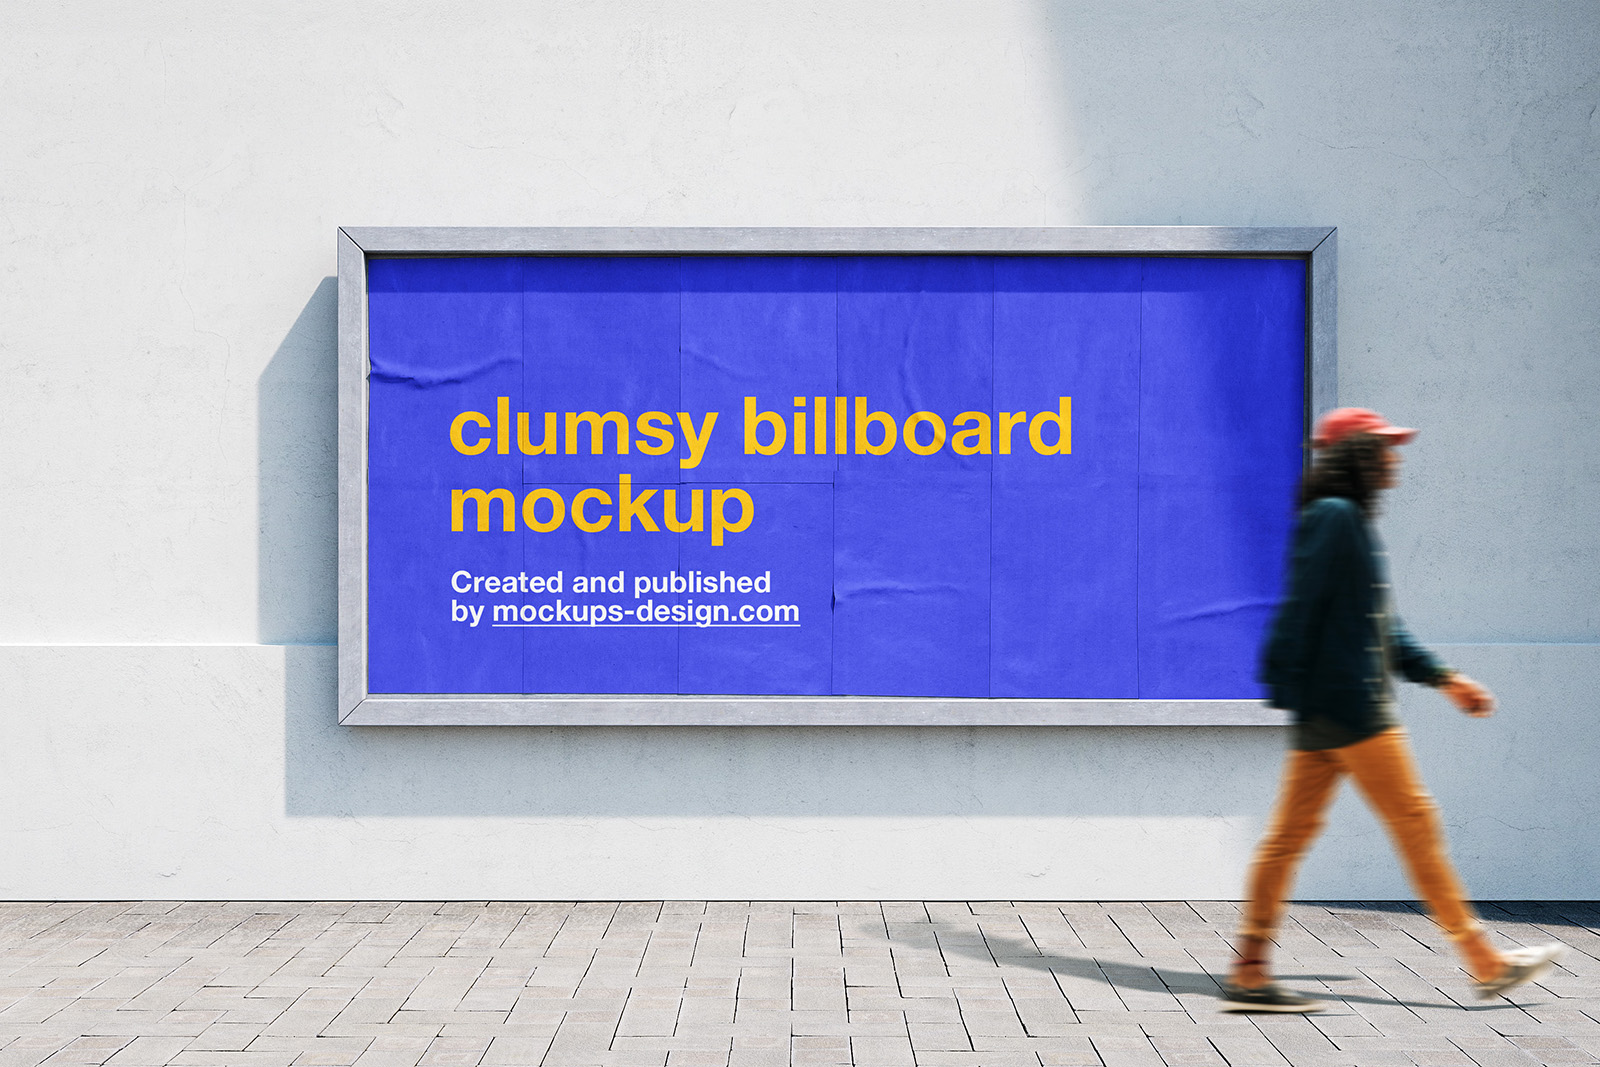 Clumsy billboard mockup